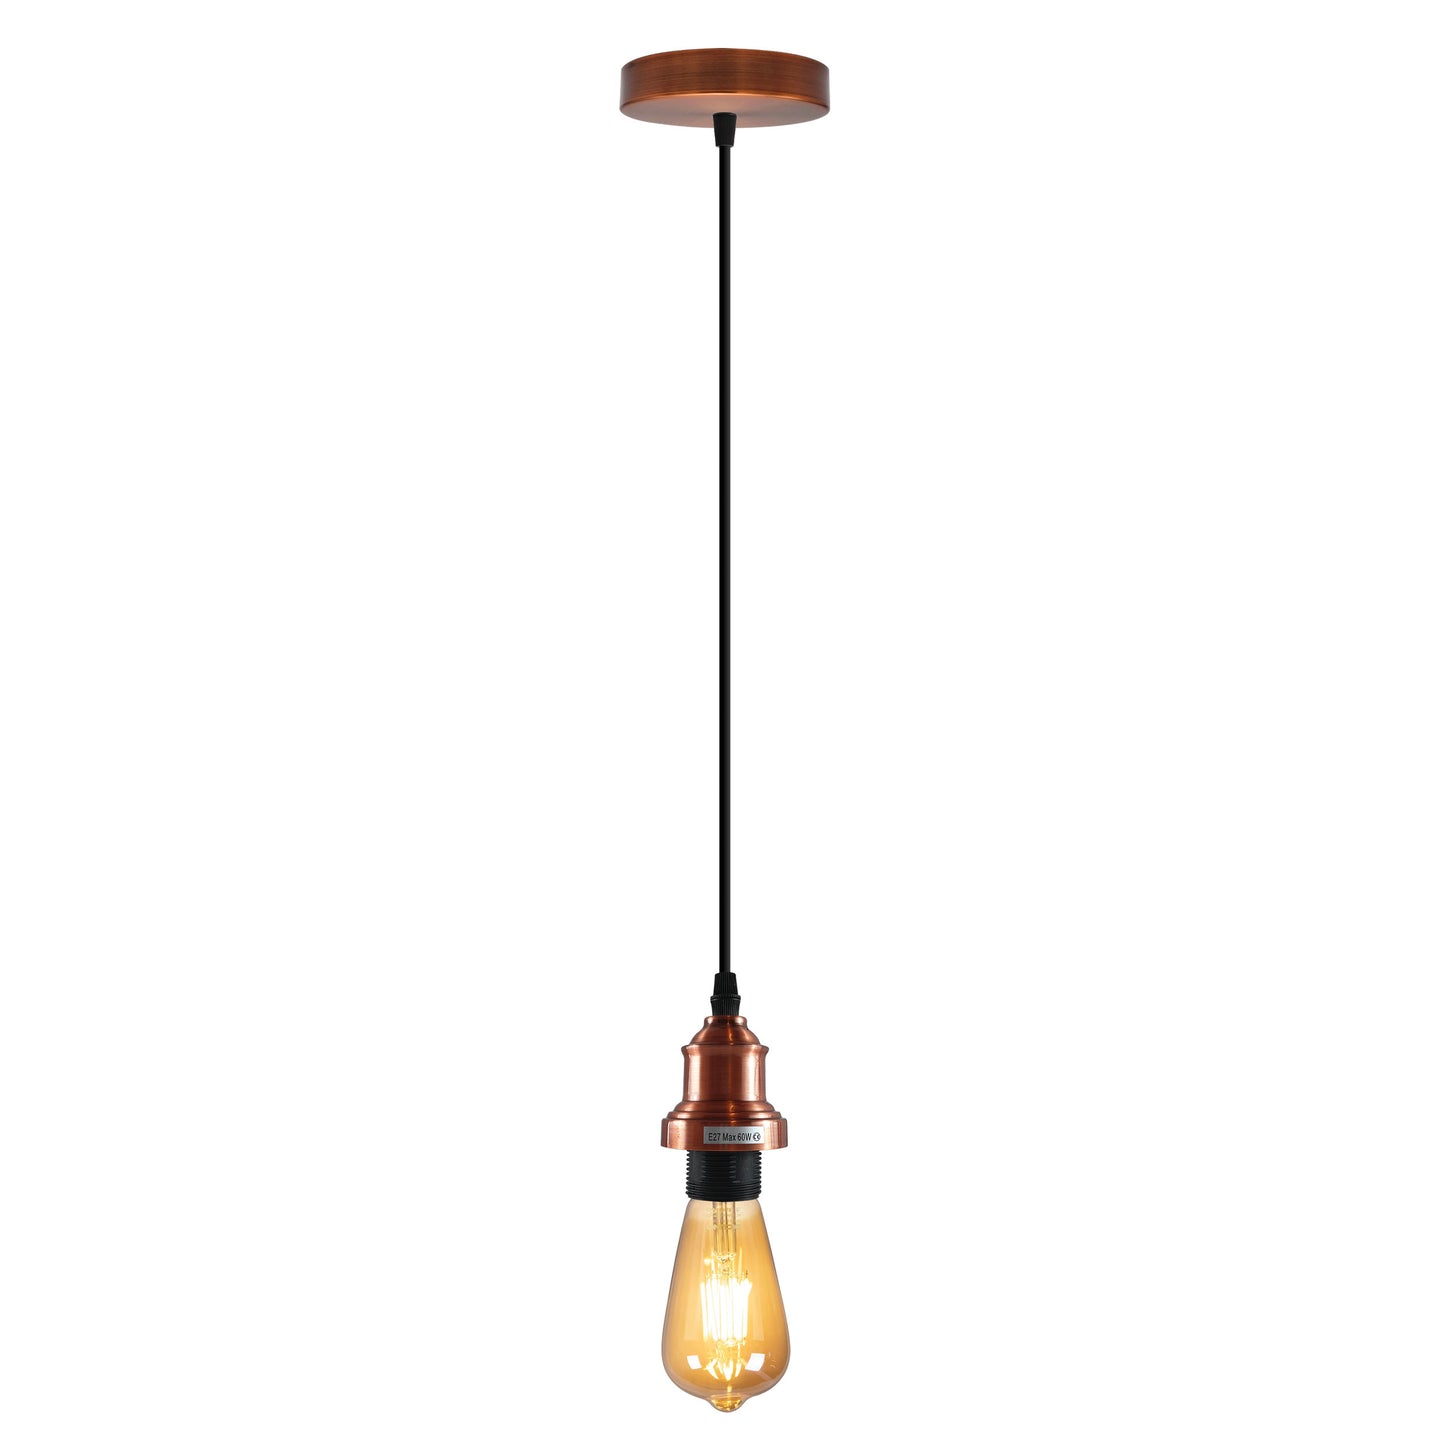 Vintage Industrial Copper Ceiling Pendant Light